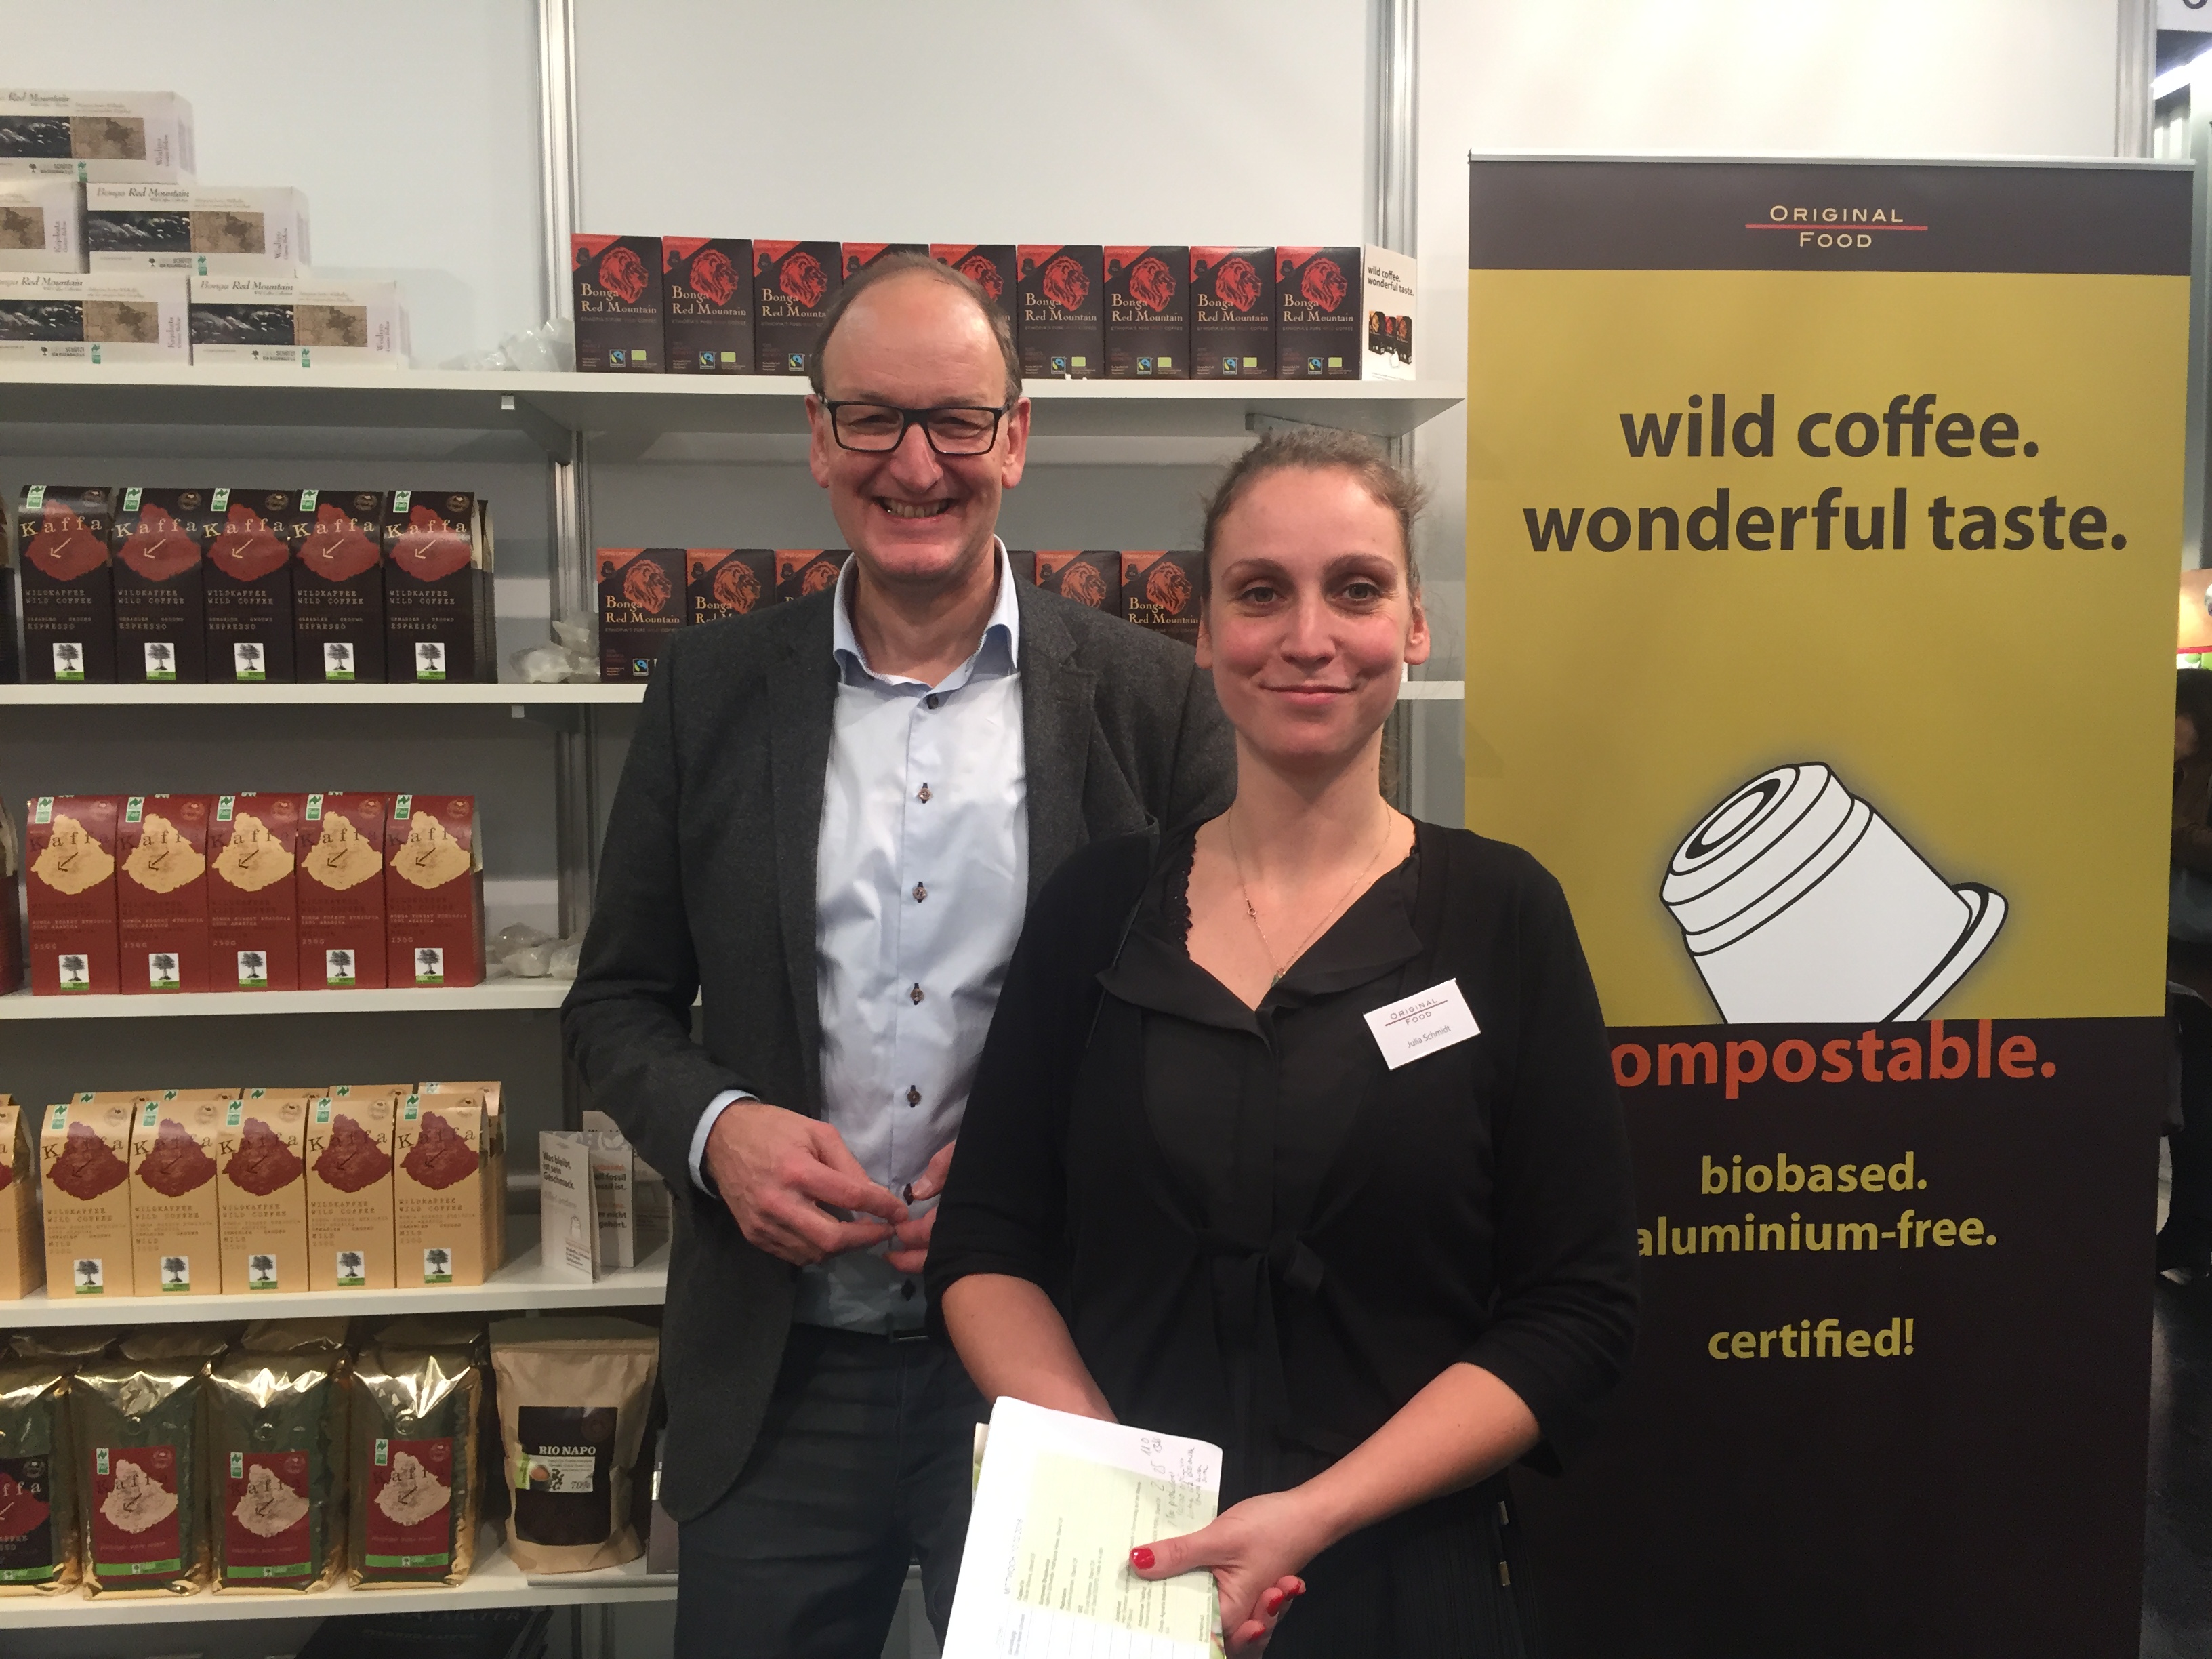 Florian Hammerstein and Julia Schmidt from Original Food at their boot at Biofach 2016